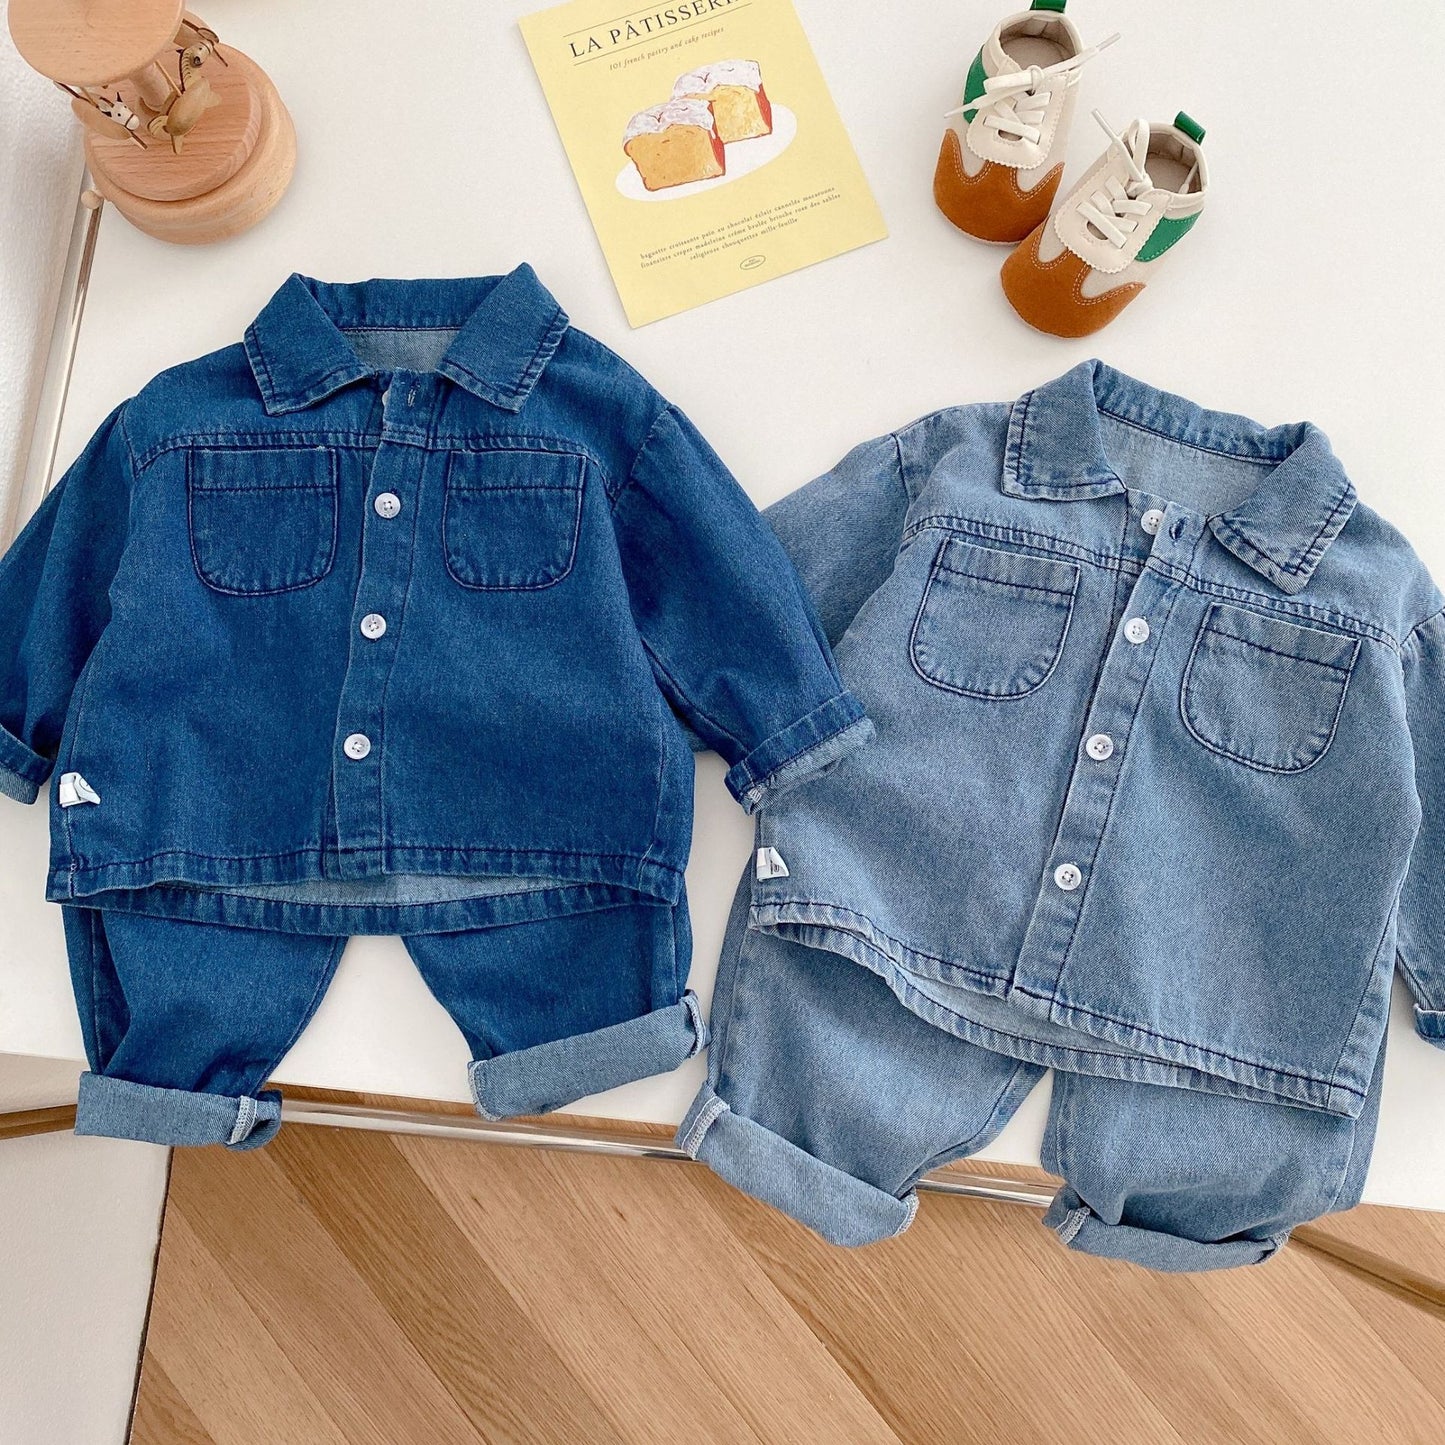 Infant Toddler Denim Girls' Boys' Clothing Button Top Dark Blue Jeans Pant Sets